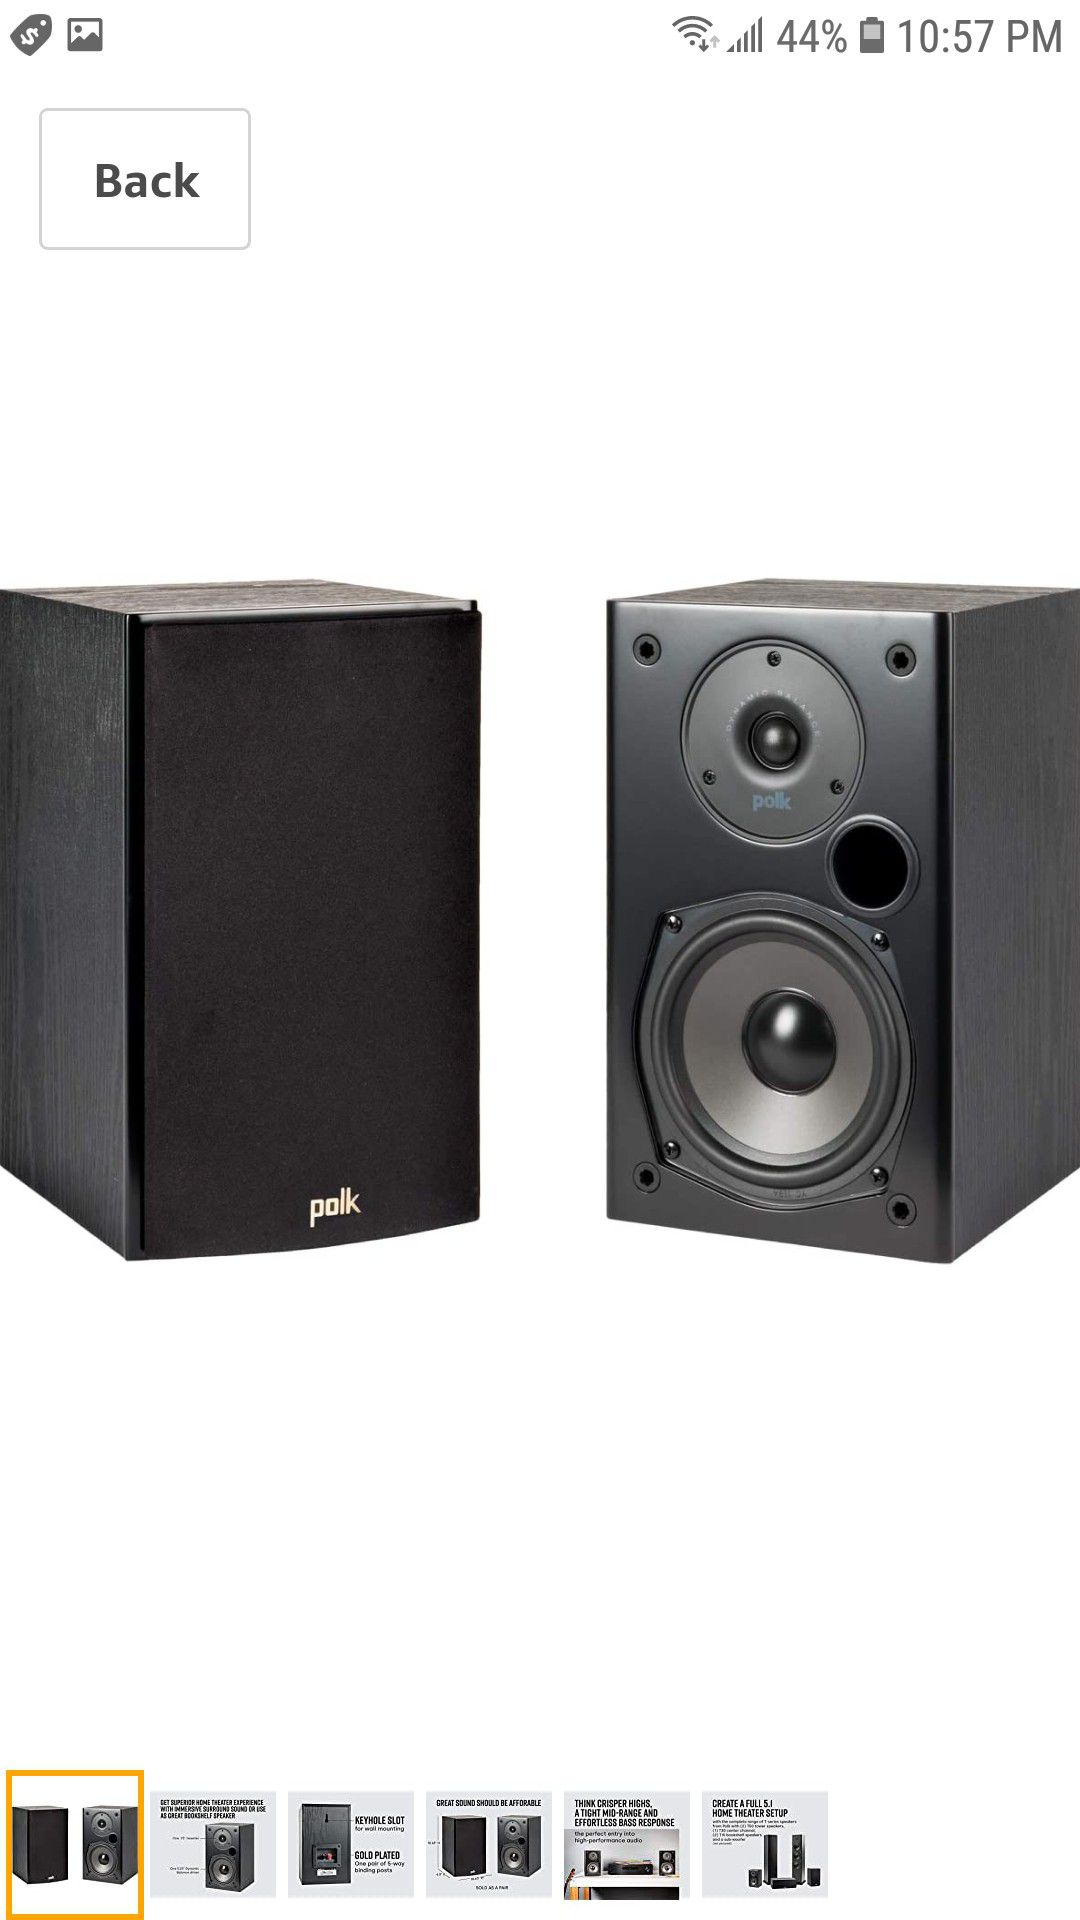 Polk Audio T15 100 Watt Home Theater Bookshelf Speakers – Hi-Res Audio with Deep Bass Response | Dolby and DTS Surround |Pair, Black